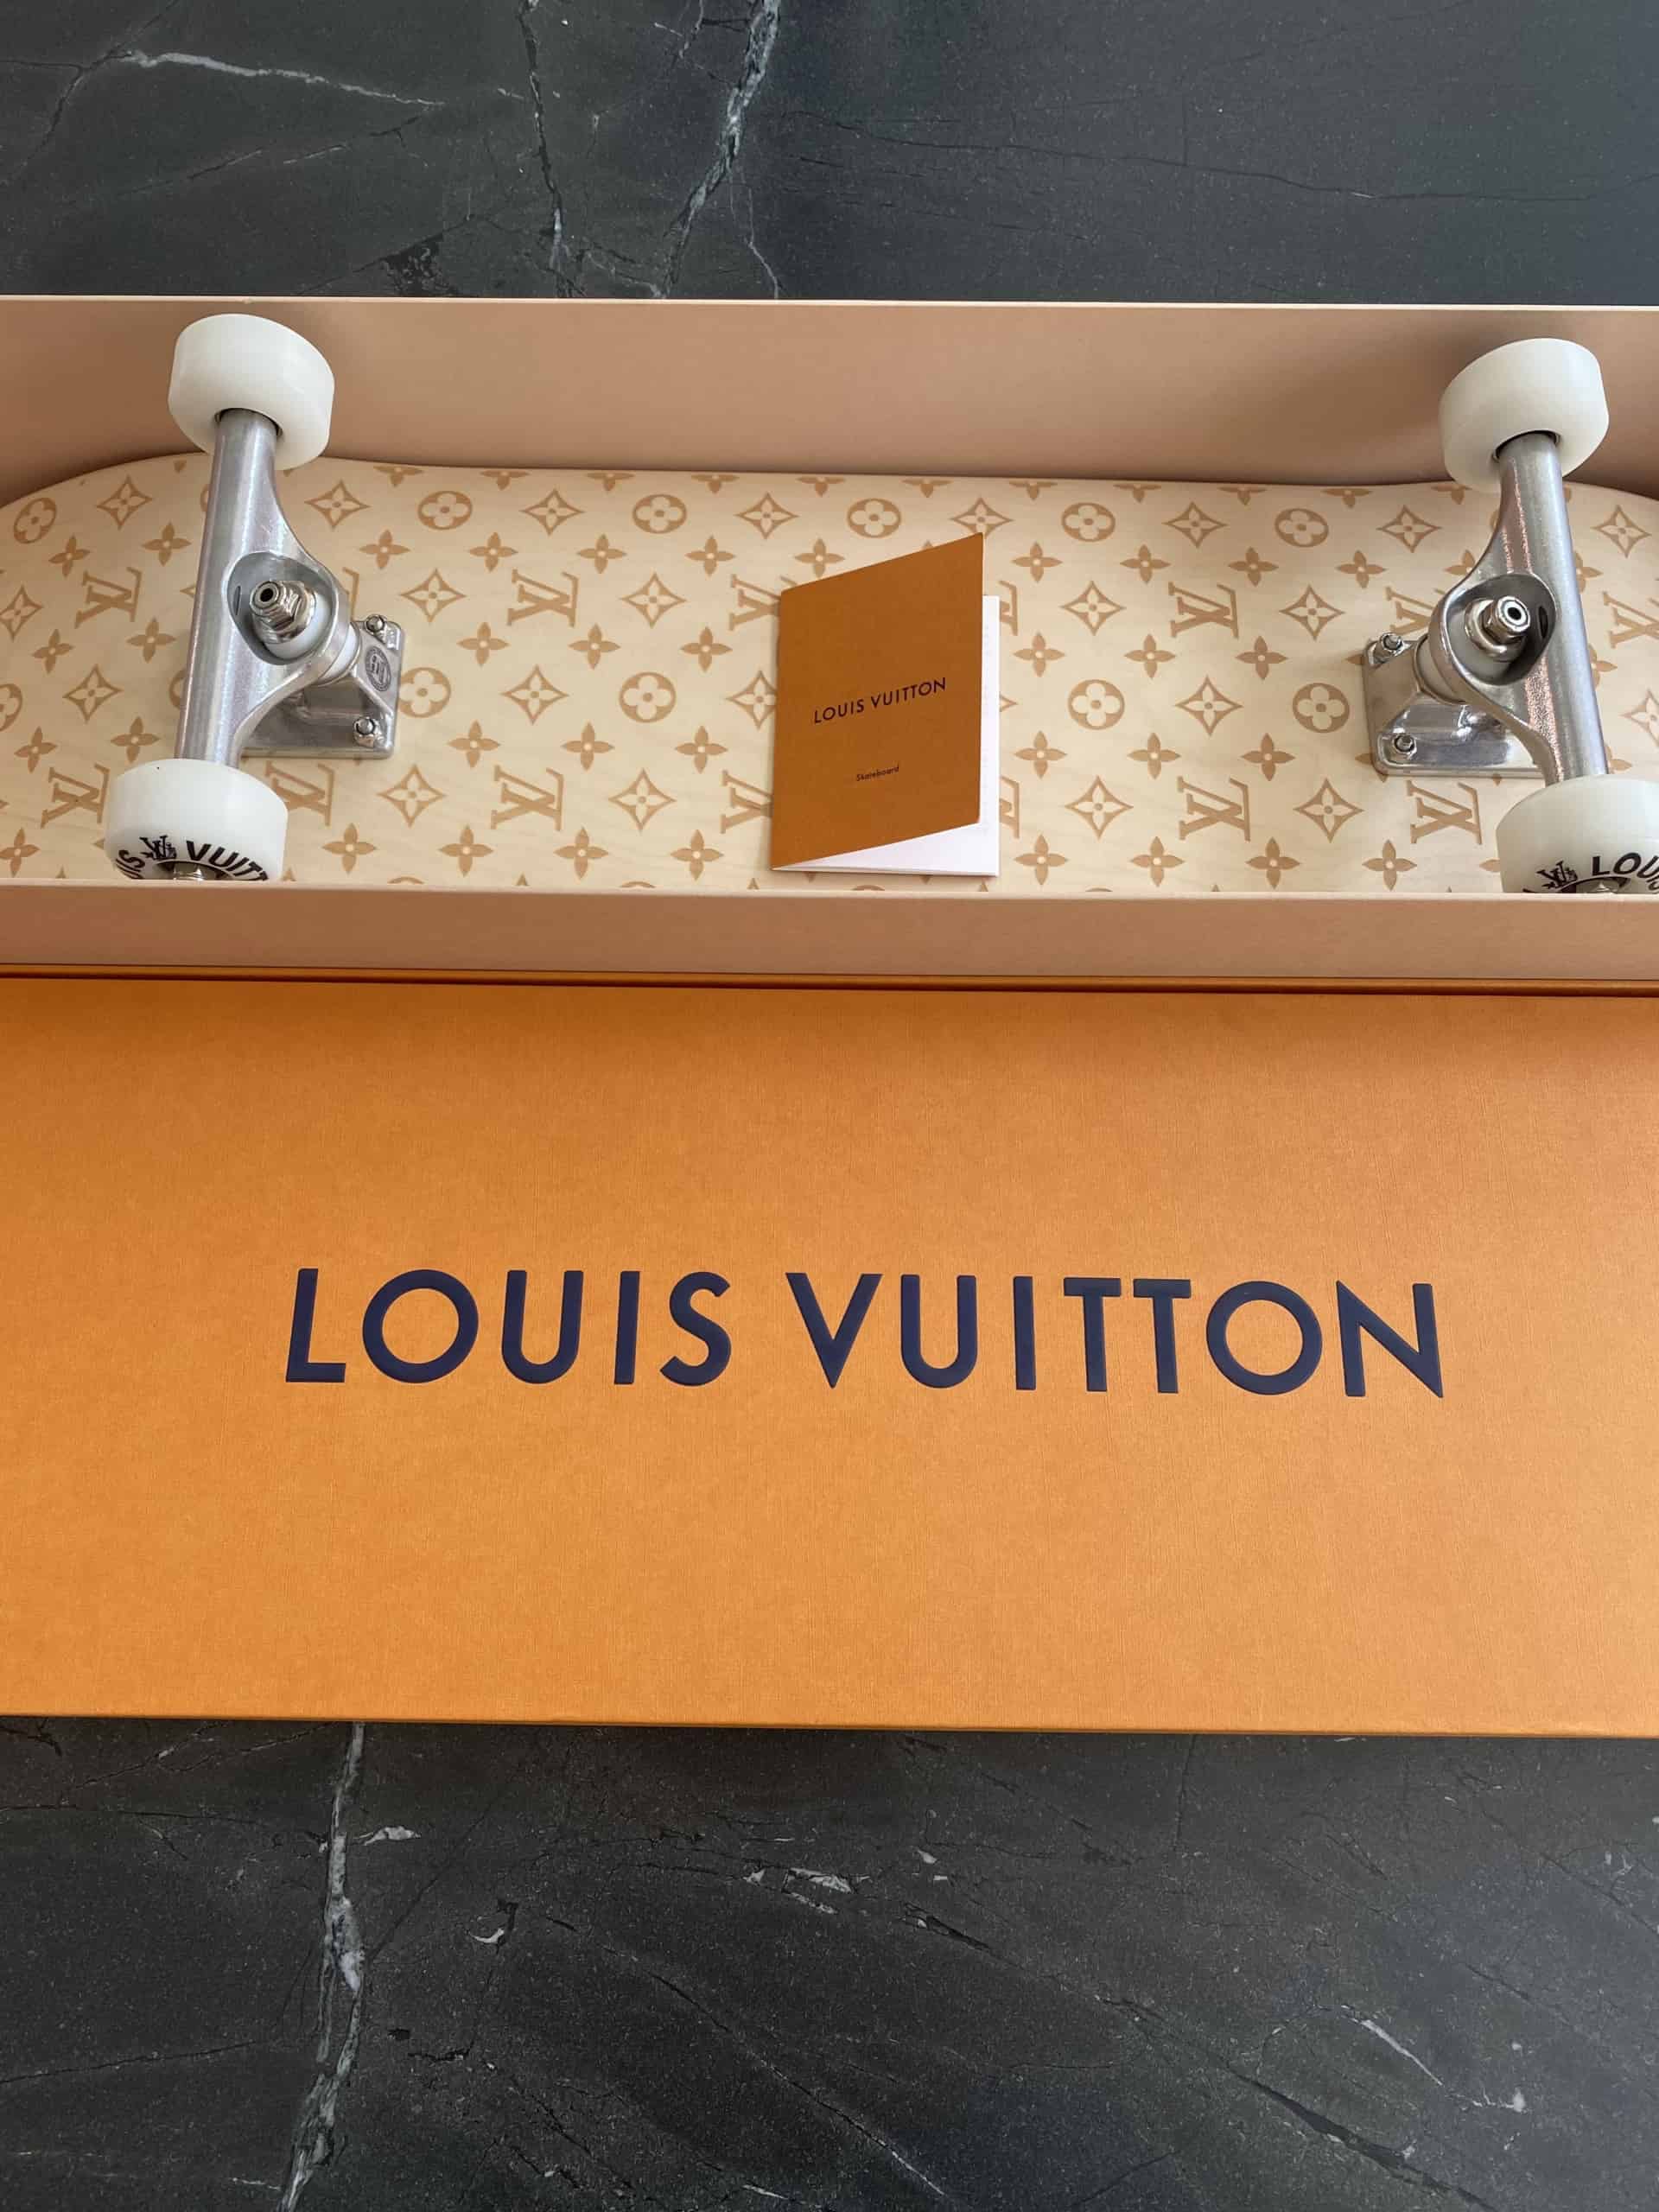 Louis Vuitton Virgil Abloh Neon LV Monogram Skateboard 118lv26 –  Bagriculture